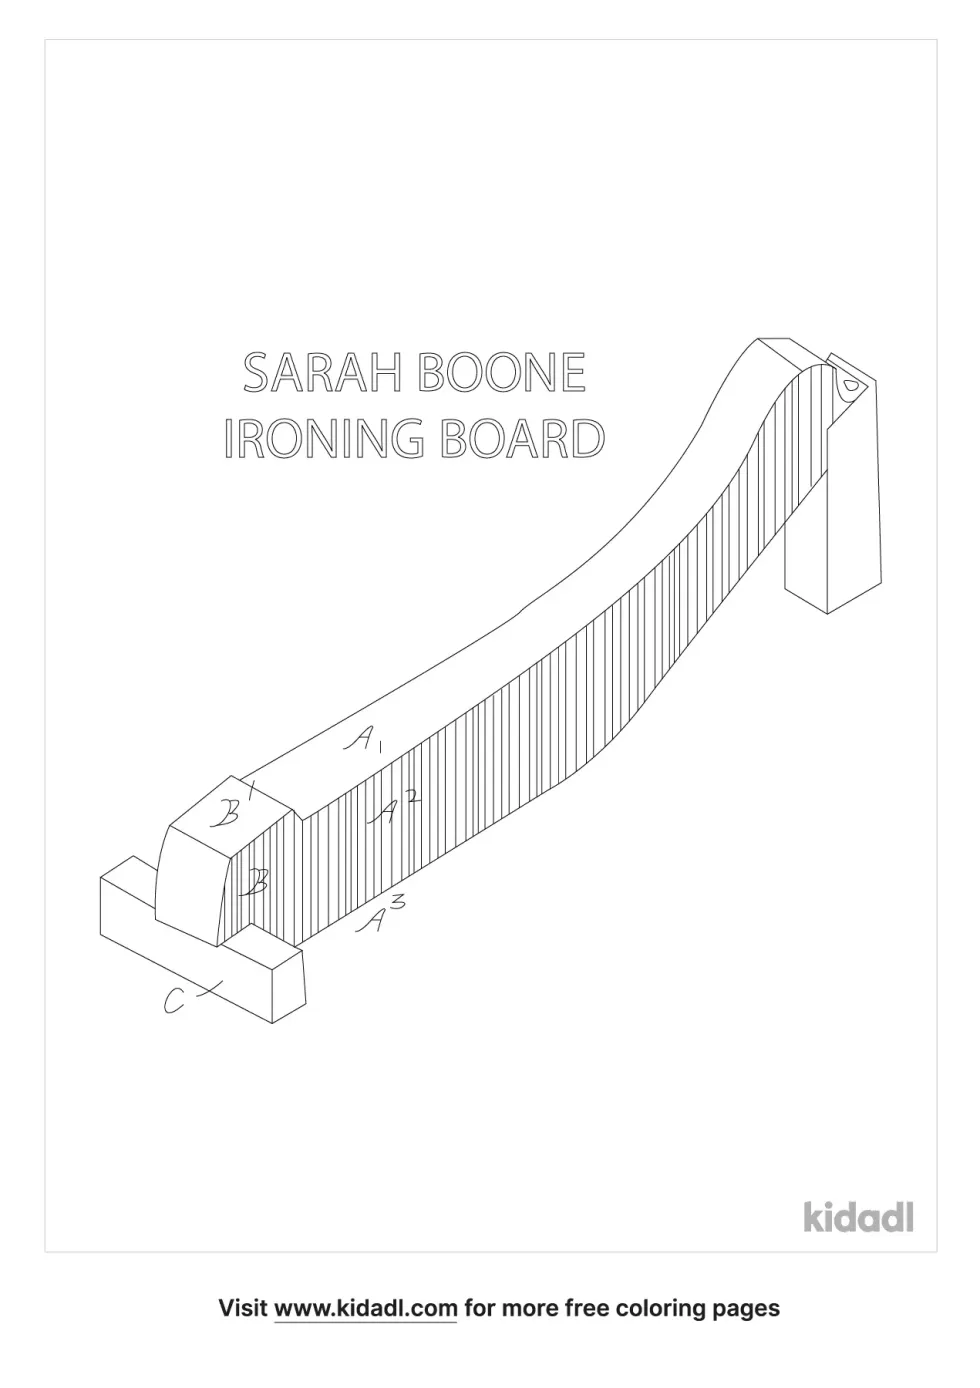 Sarah Boone Ironing Board